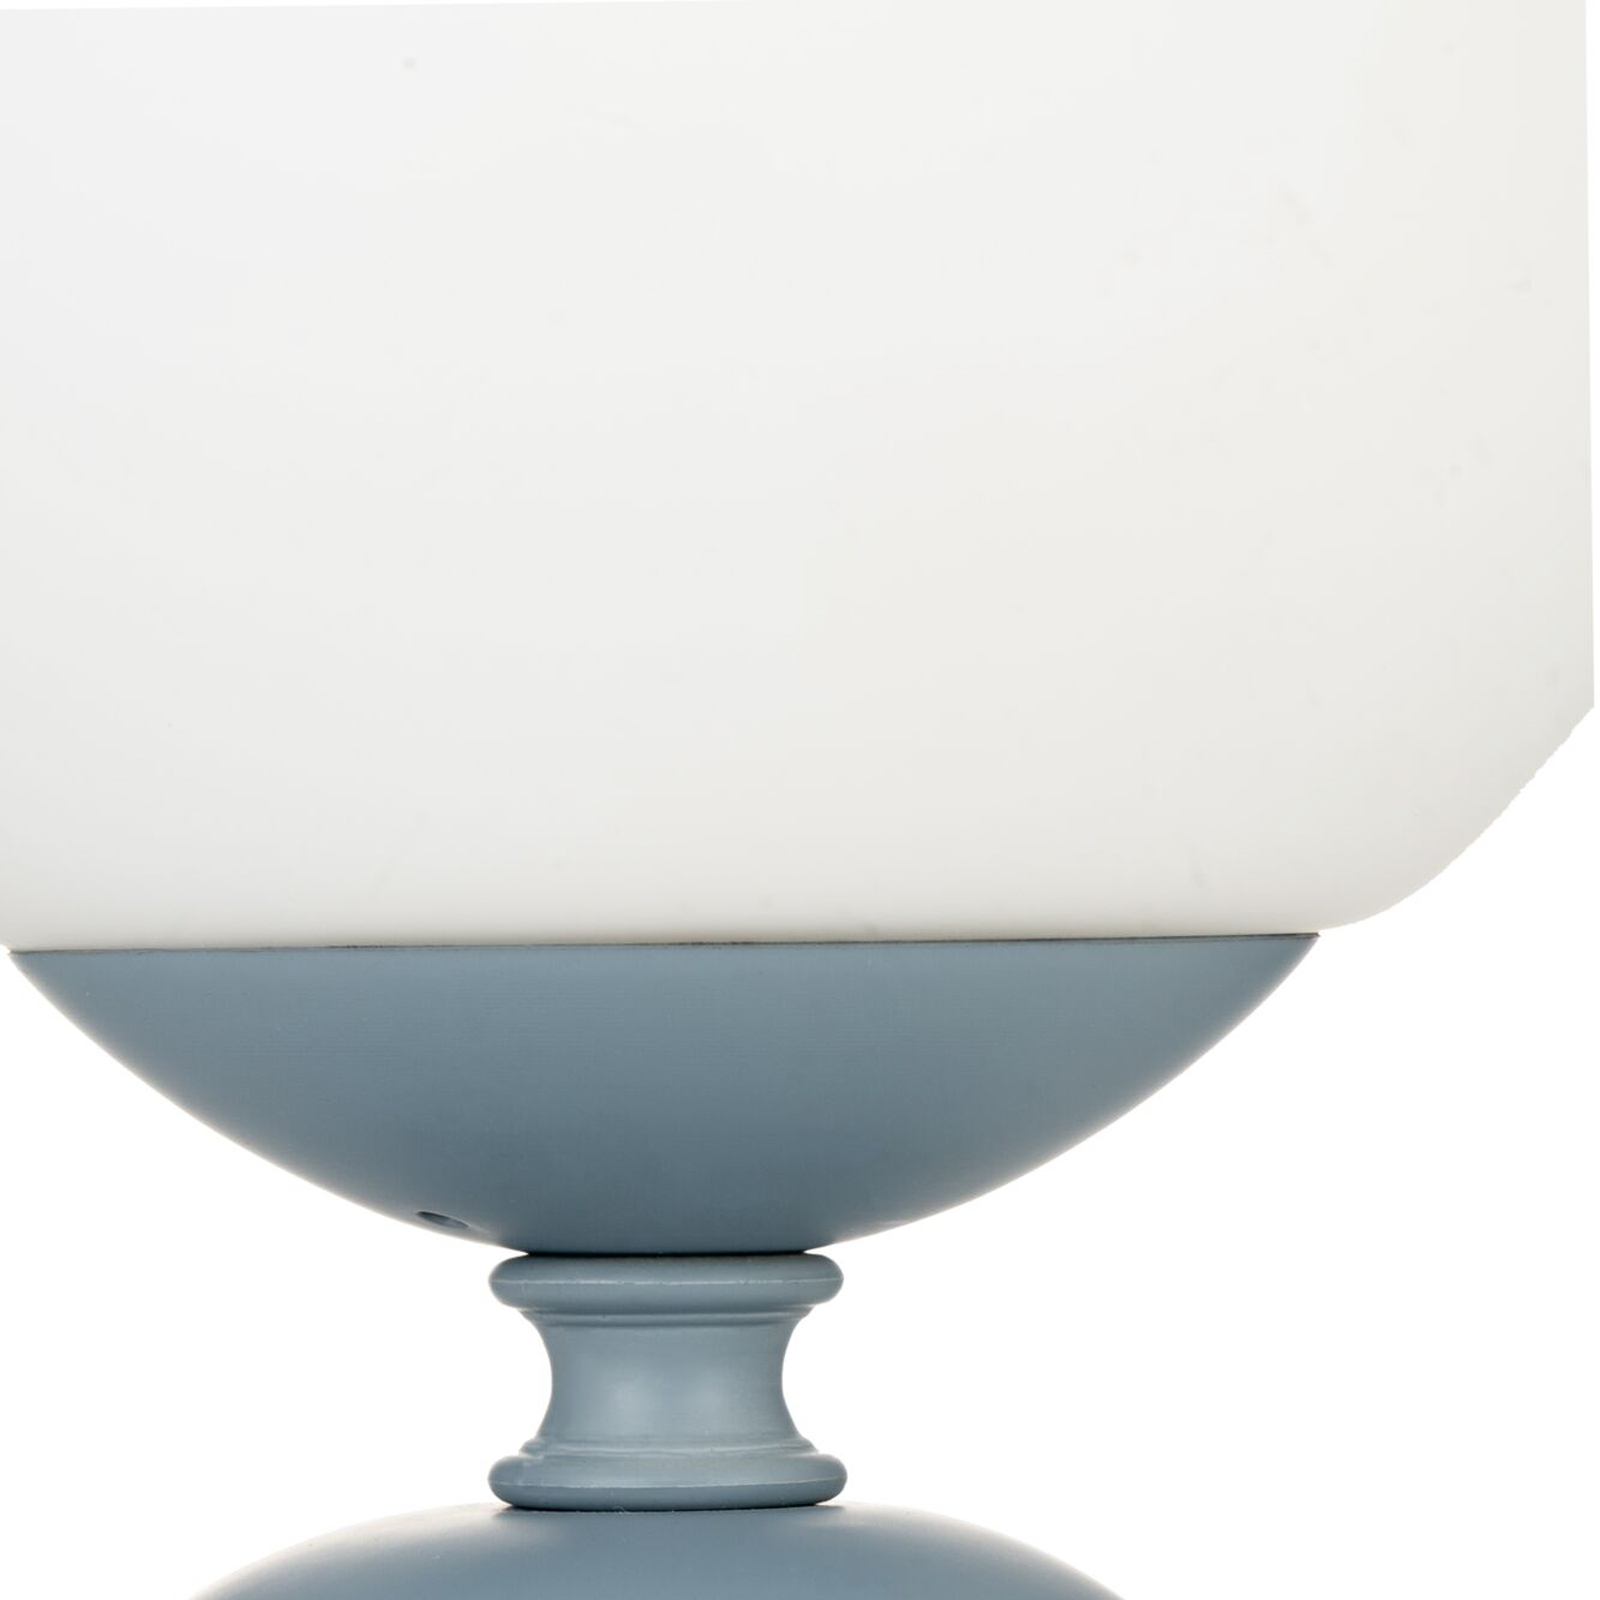 Pauleen Glowing Charm table lamp blue ceramic base